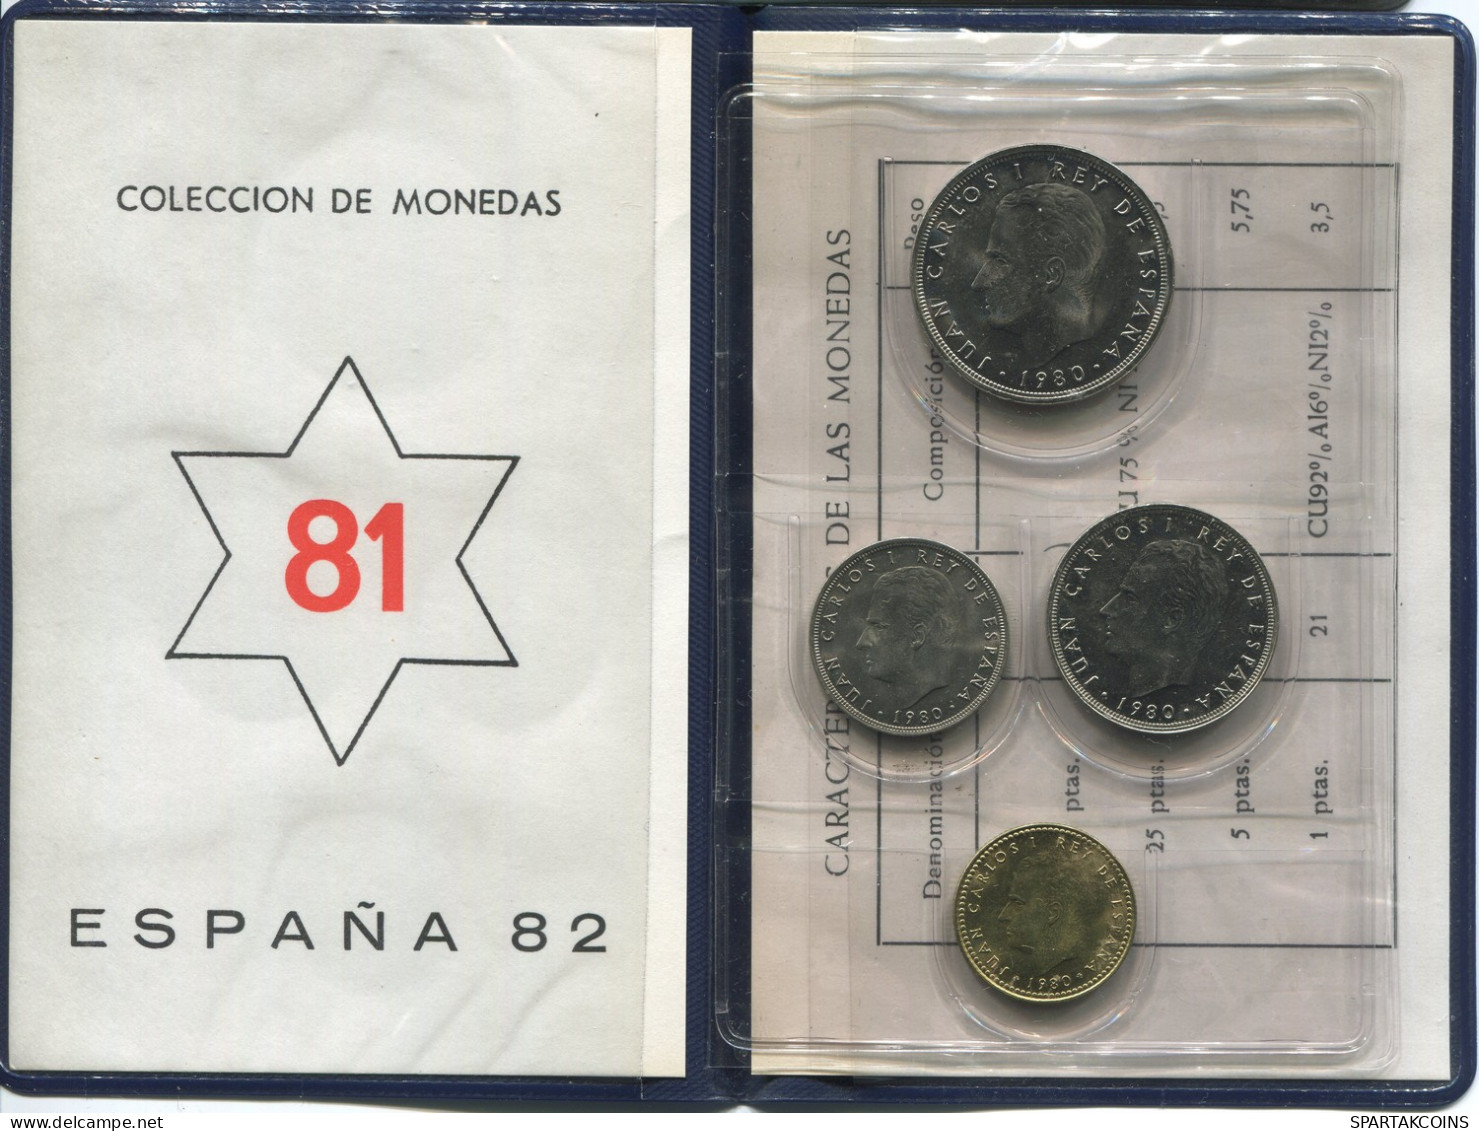 SPAIN 1981*81 Coin SET MUNDIAL*82 UNC #SET1259.4.U - Ongebruikte Sets & Proefsets